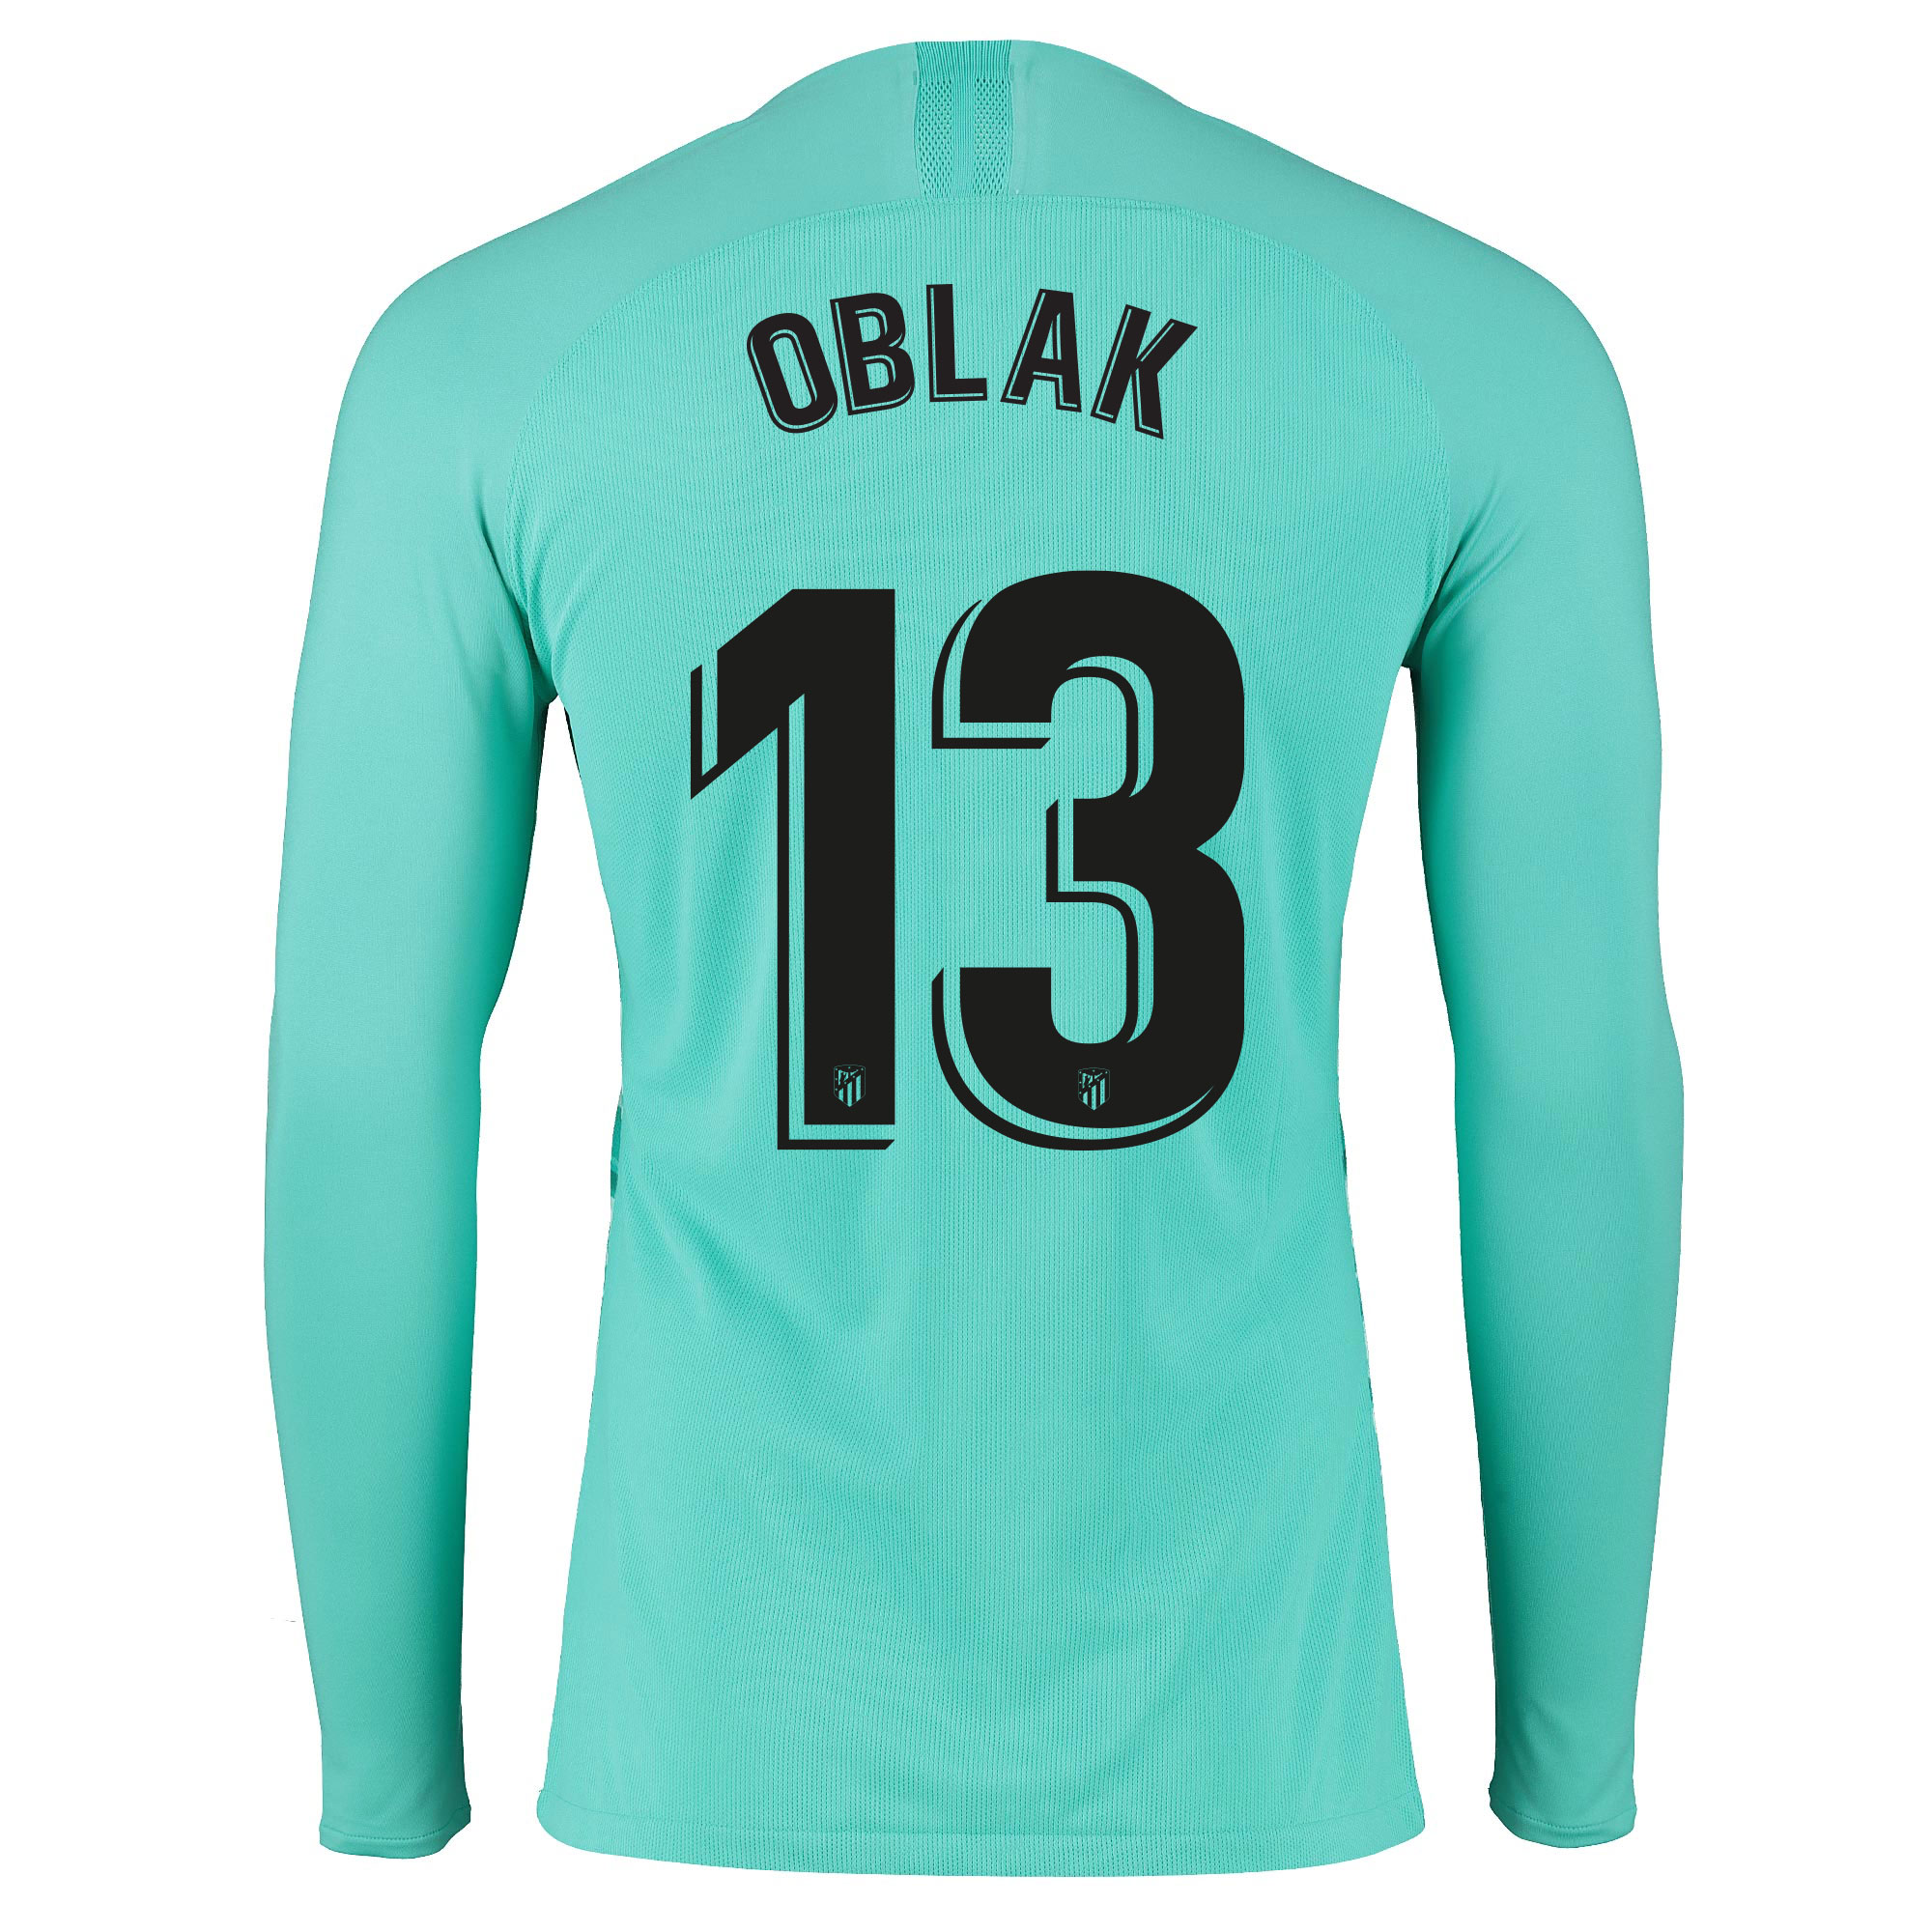 Atlético de Madrid Goalkeeper Shirt 2019-20 with Oblak 13 printing |  Atletico